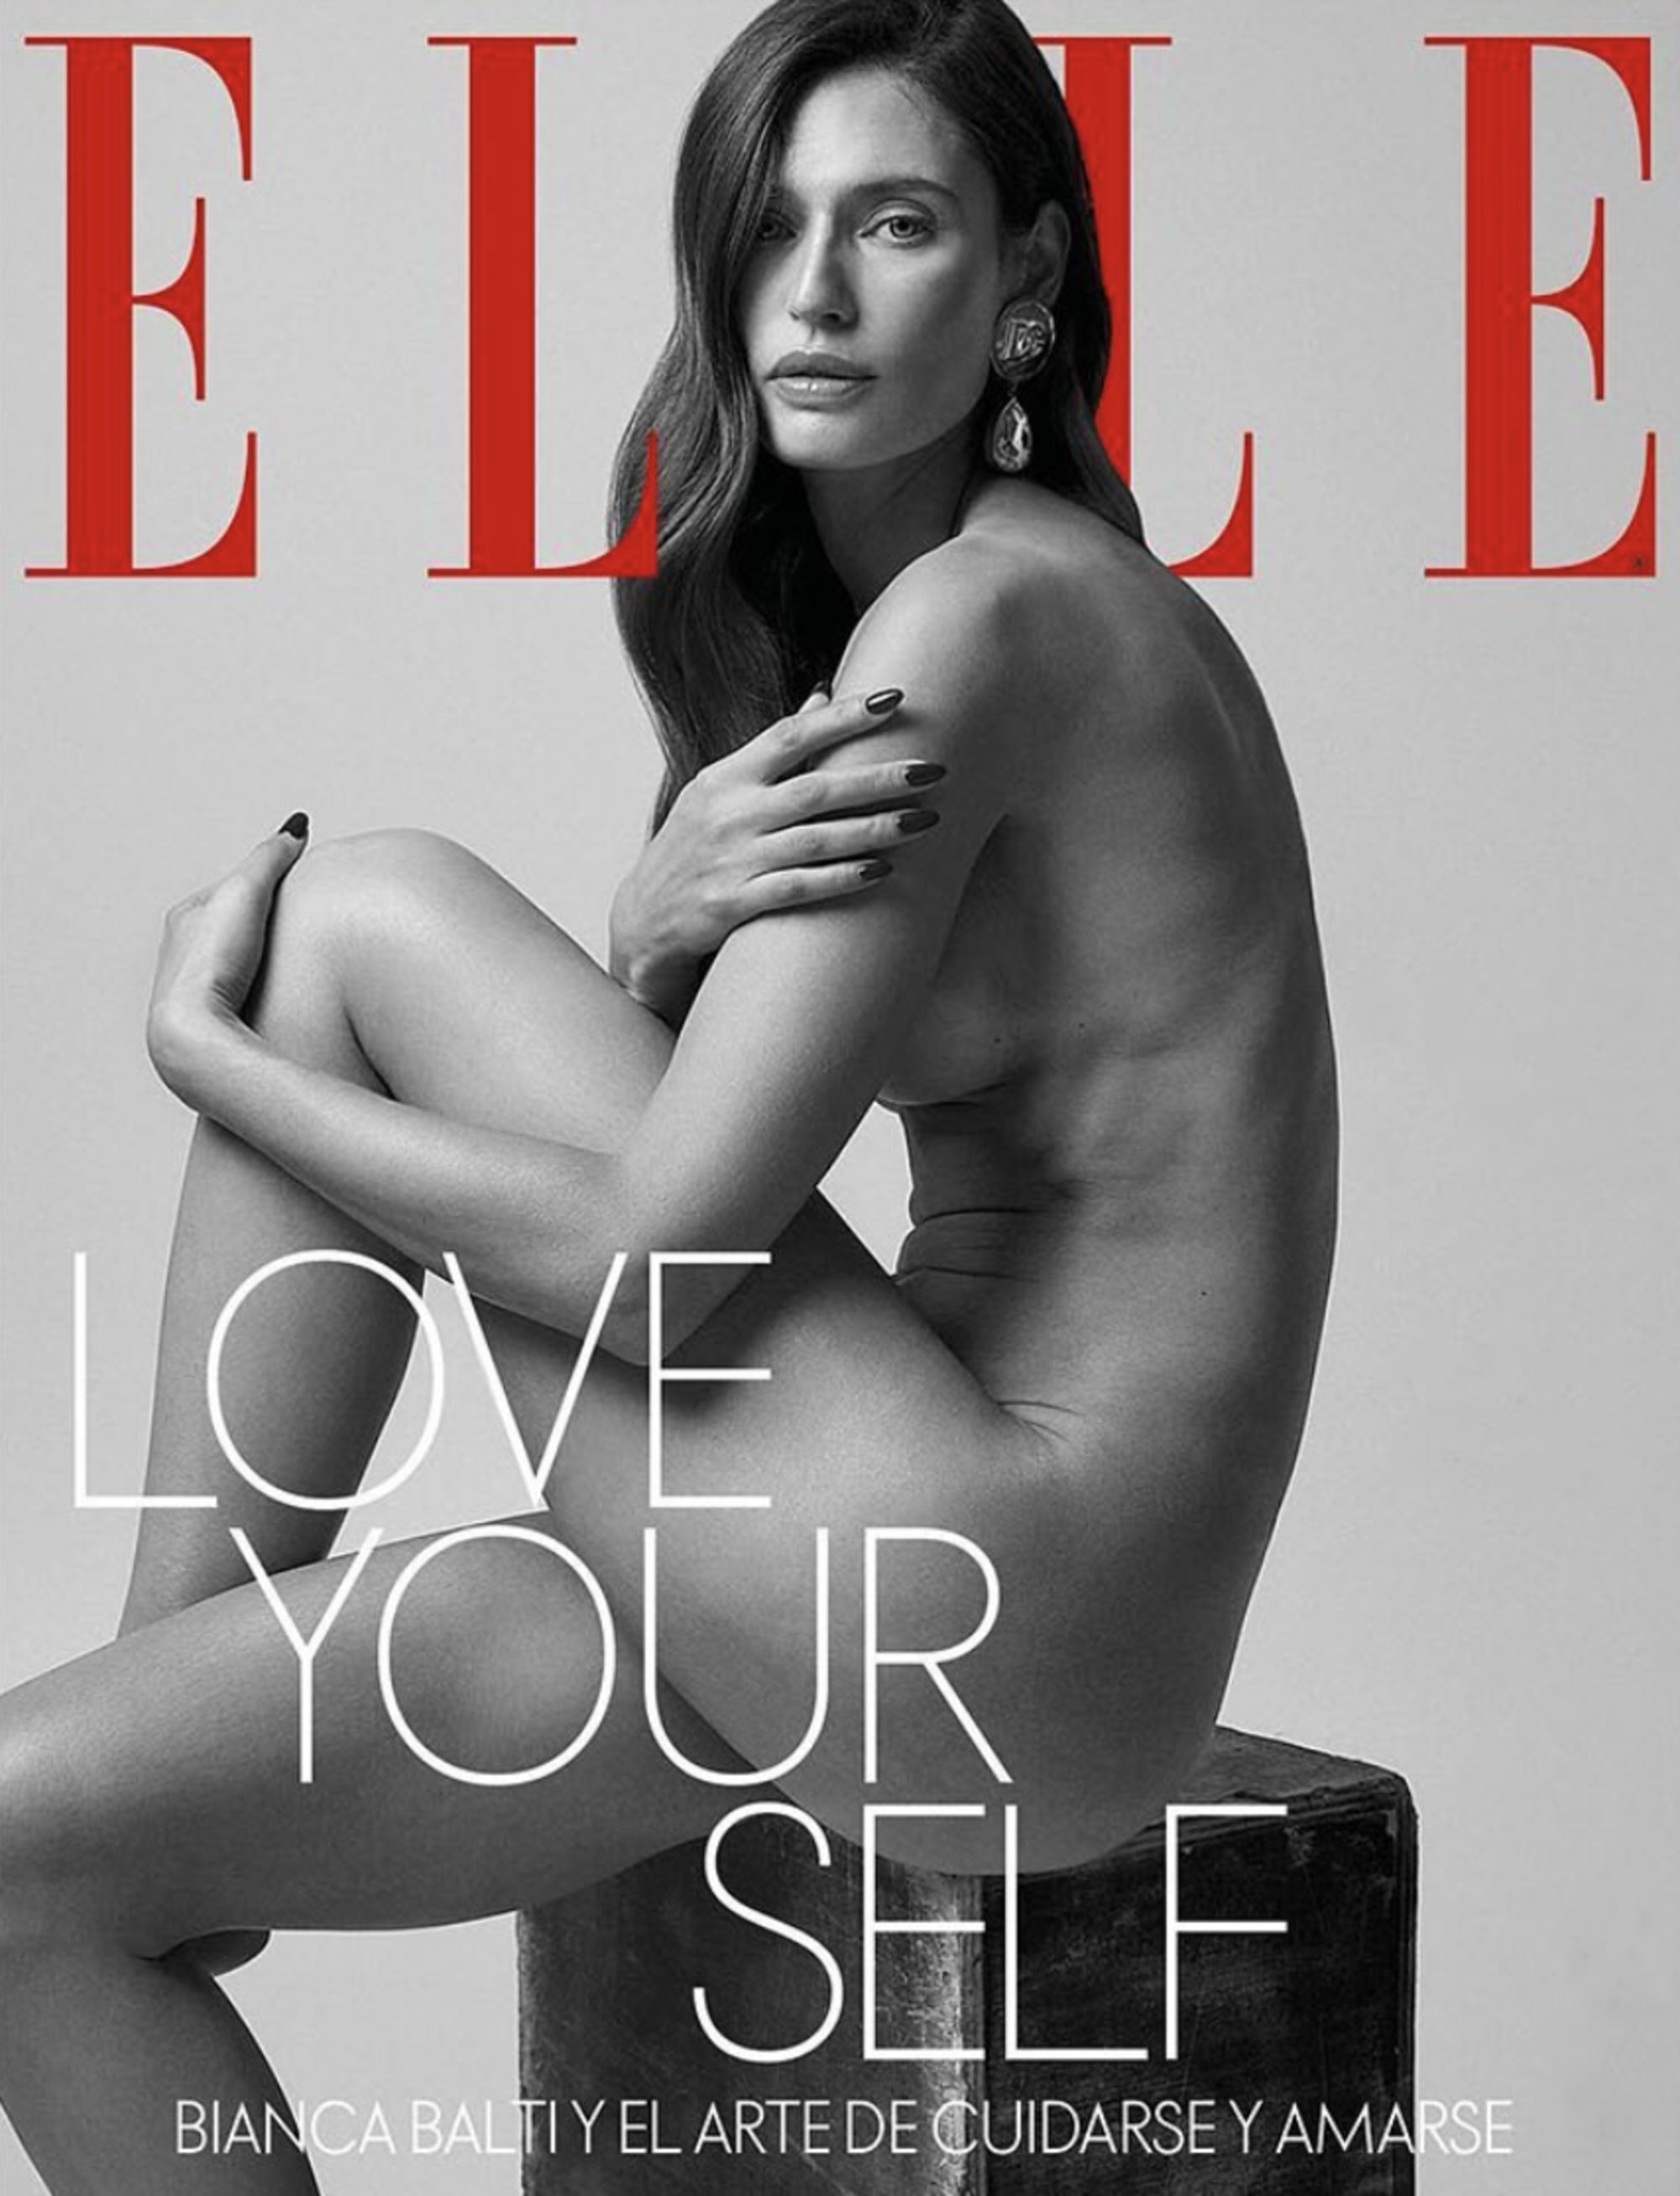 La copertina di Elle dedicata a Bianca Balti